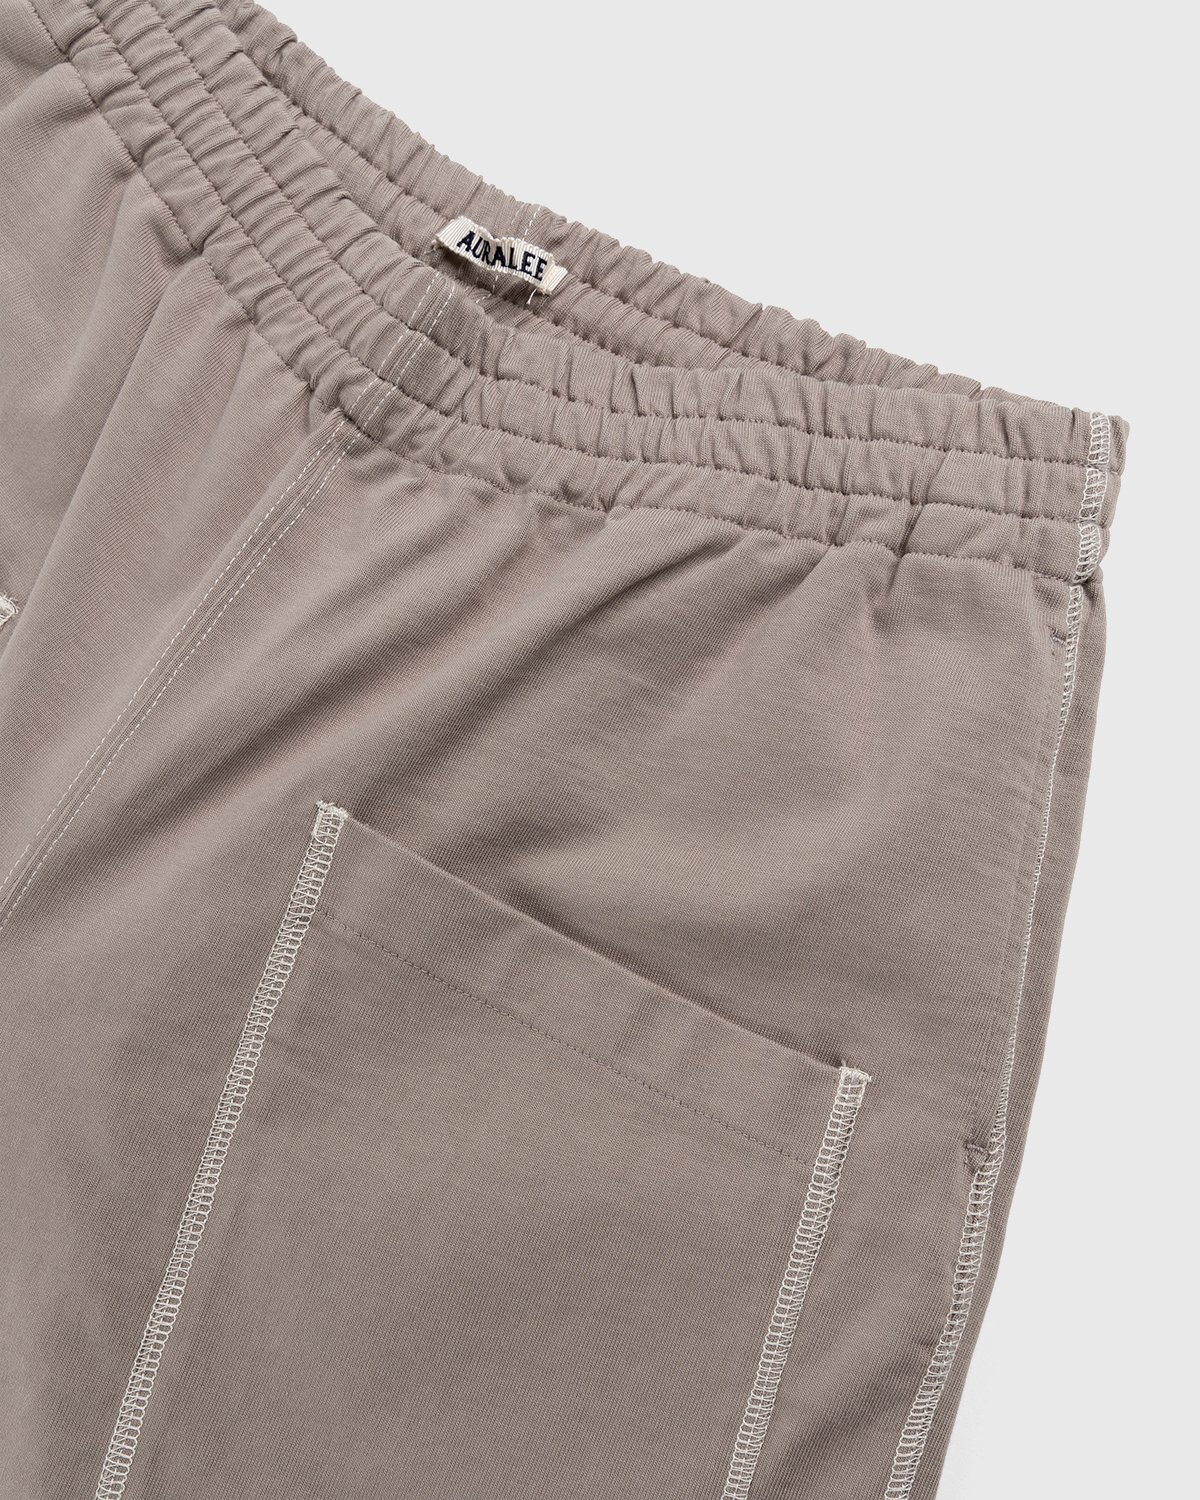 Auralee - High Density Cotton Jersey Shorts Grey Beige - Clothing - Beige - Image 3